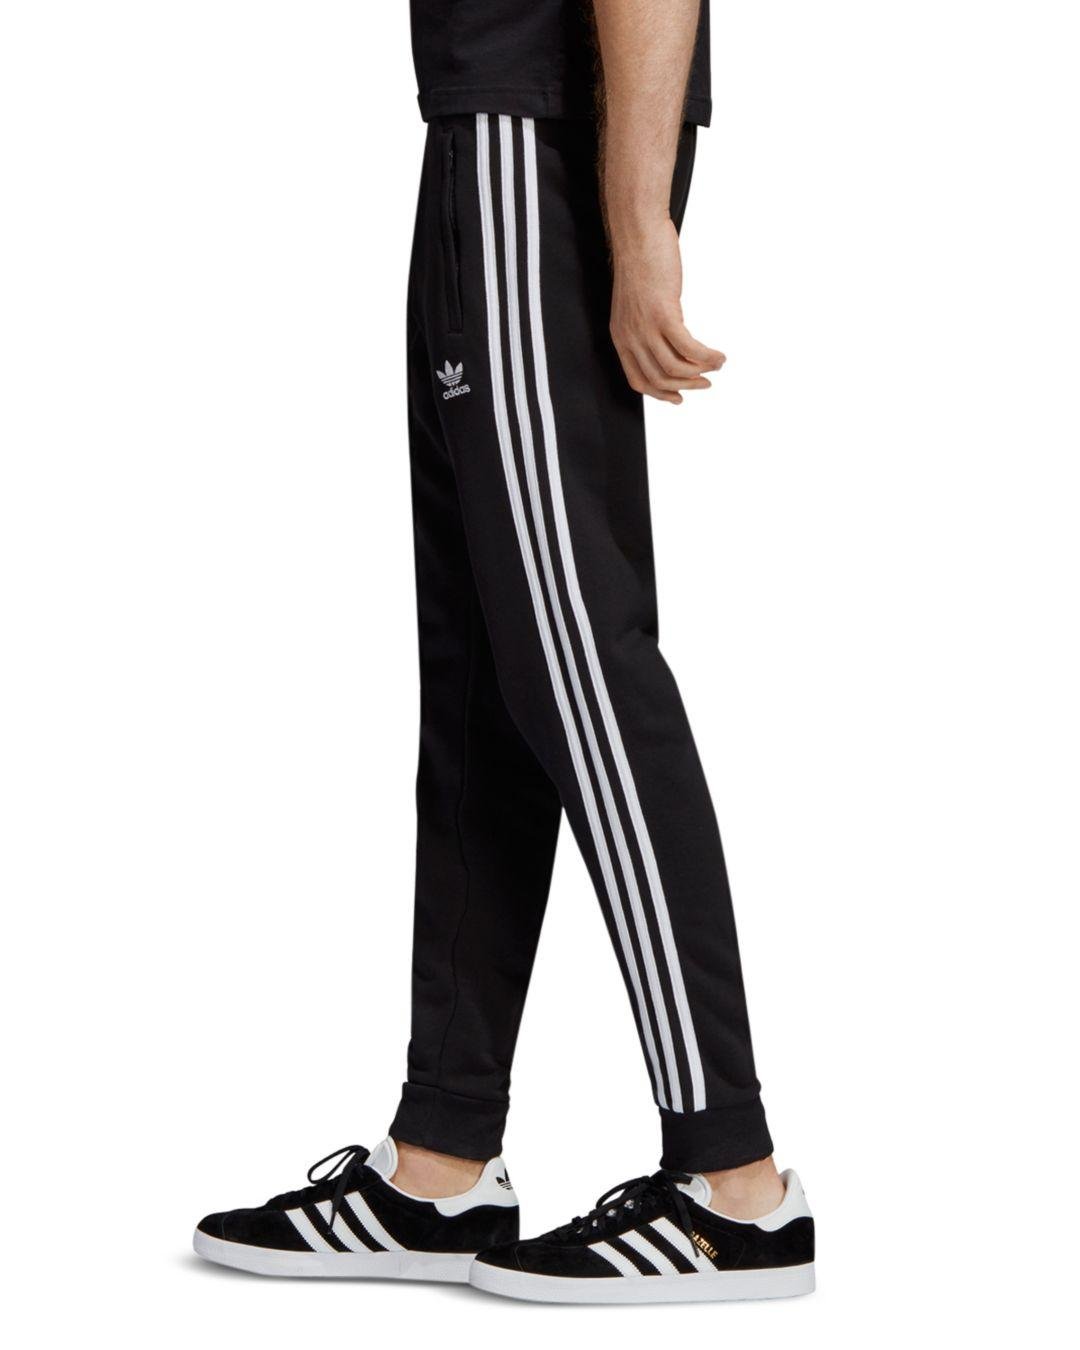 adidas Originals 3 - Stripes Jogger Pants in Black for Men - Lyst